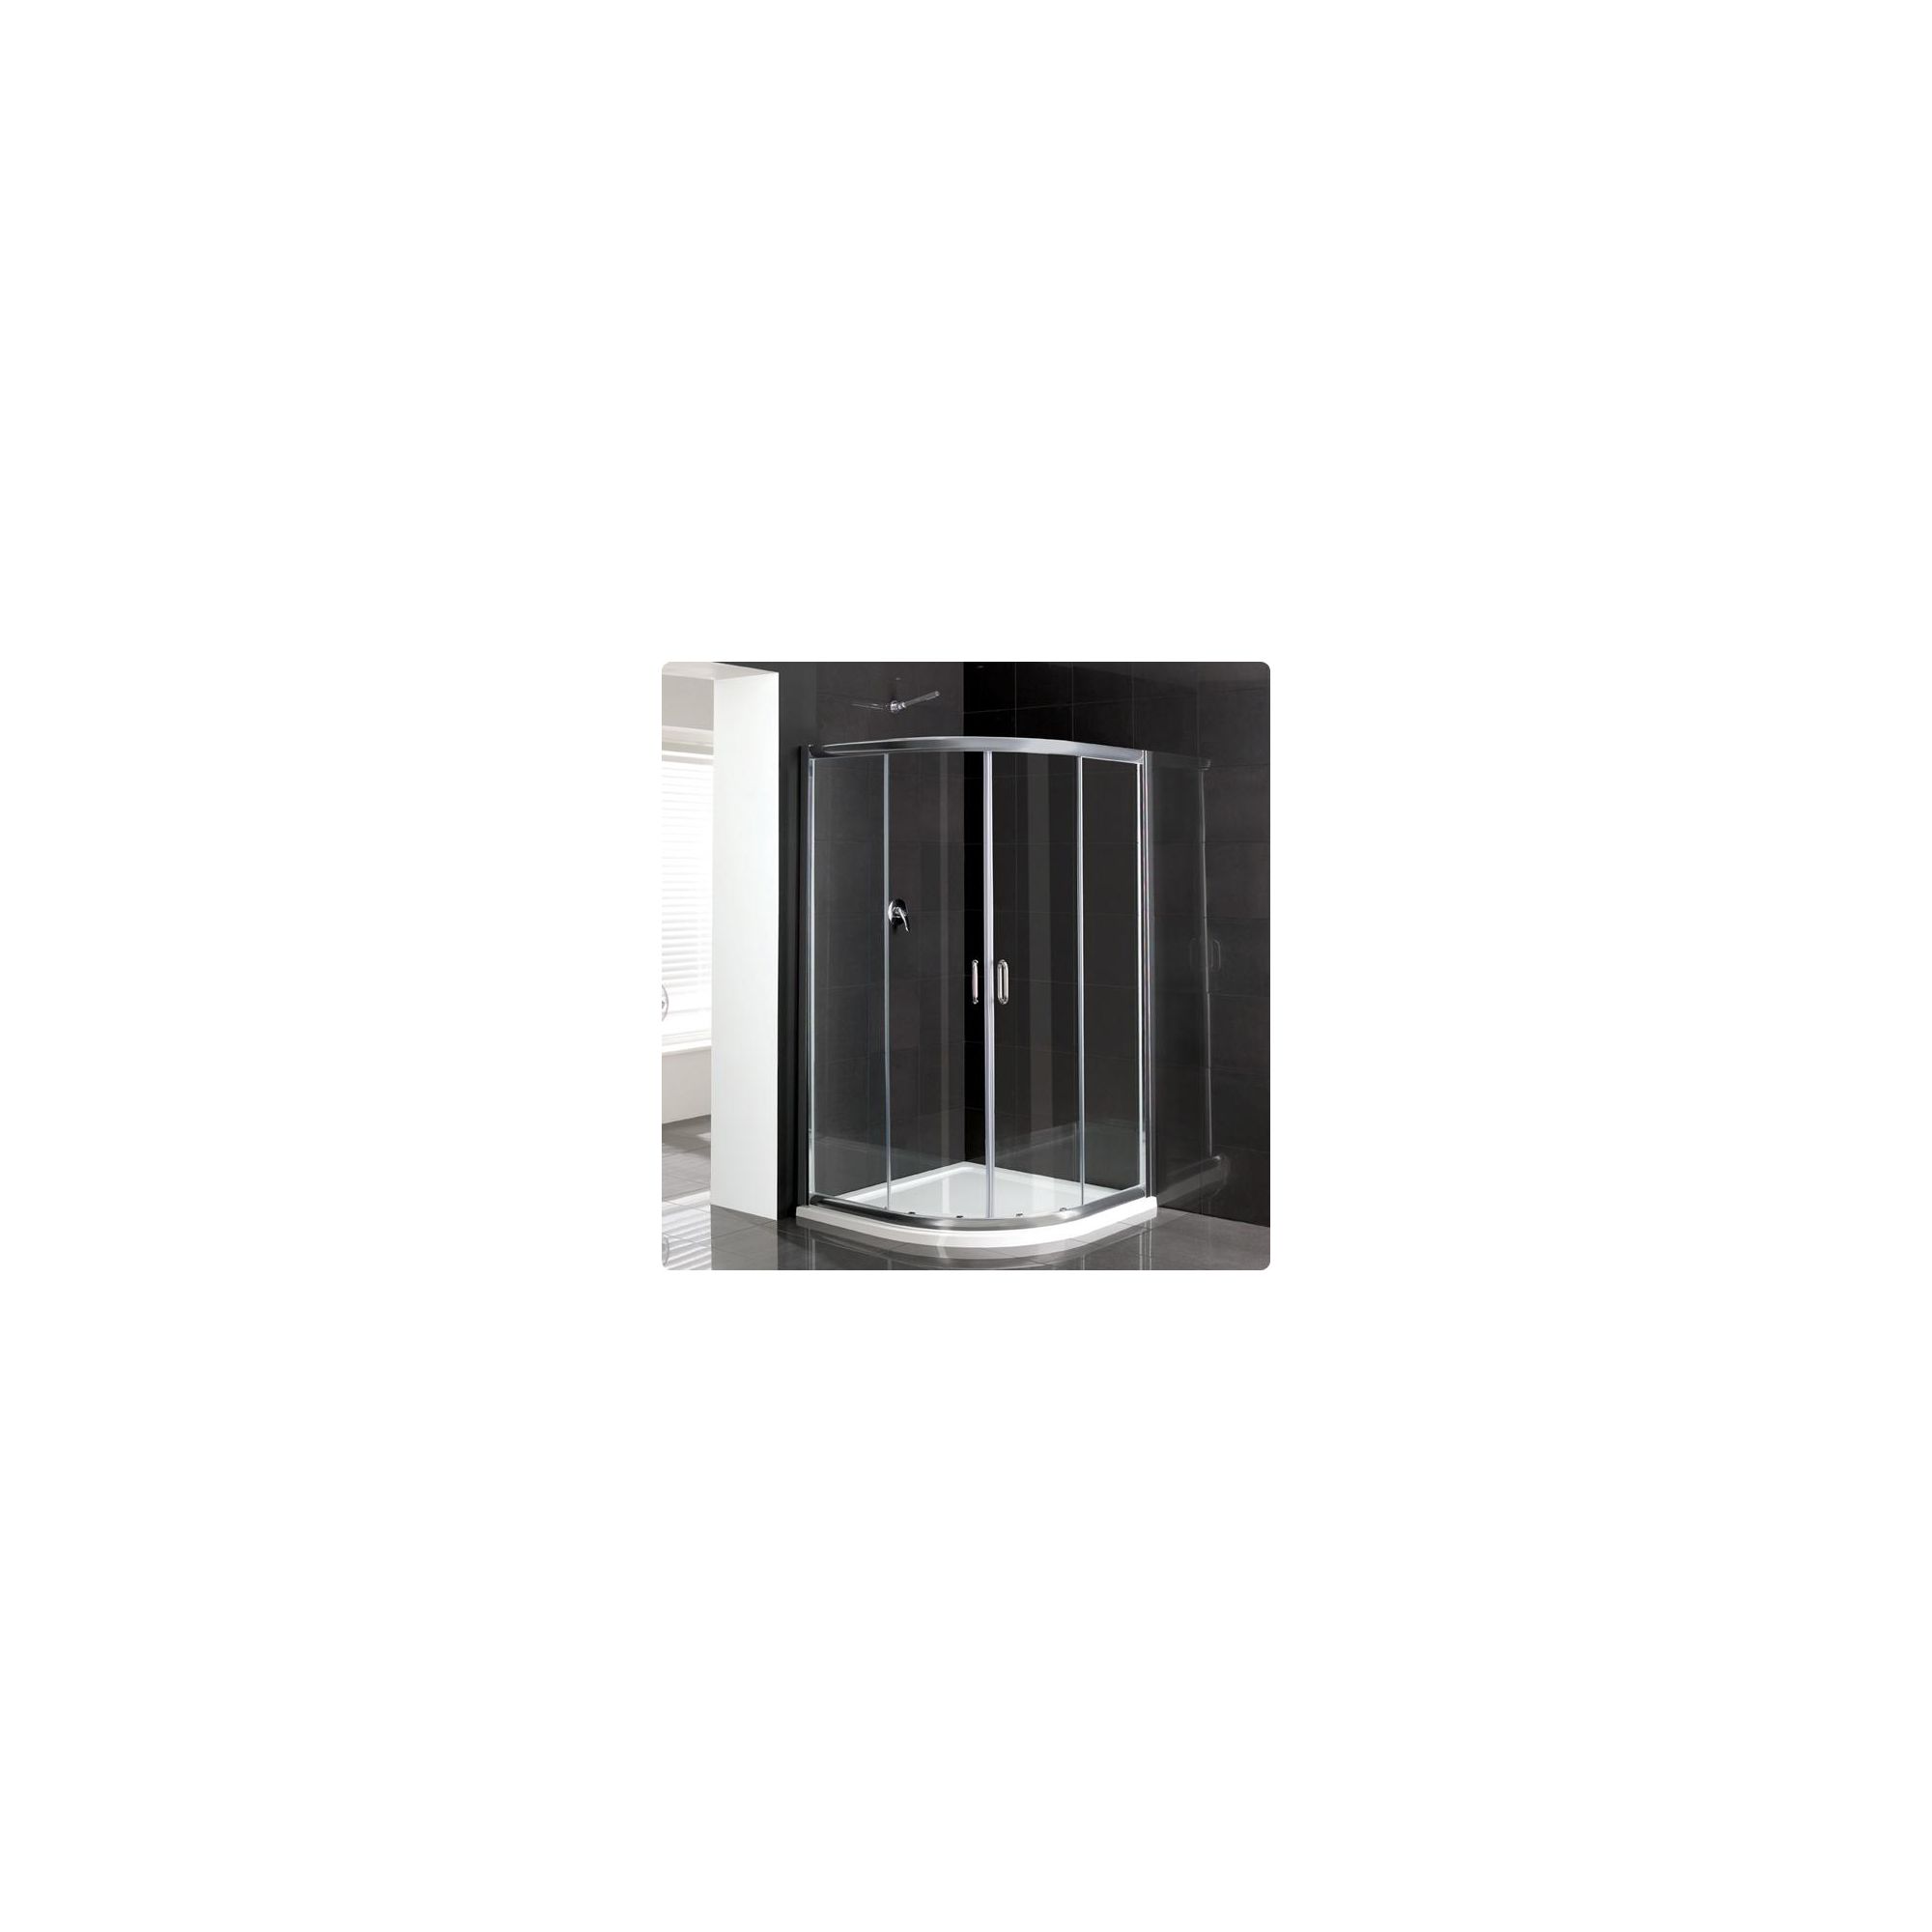 Duchy Elite Silver Quadrant Shower Enclosure 1000mm, Standard Tray, 6mm Glass at Tesco Direct